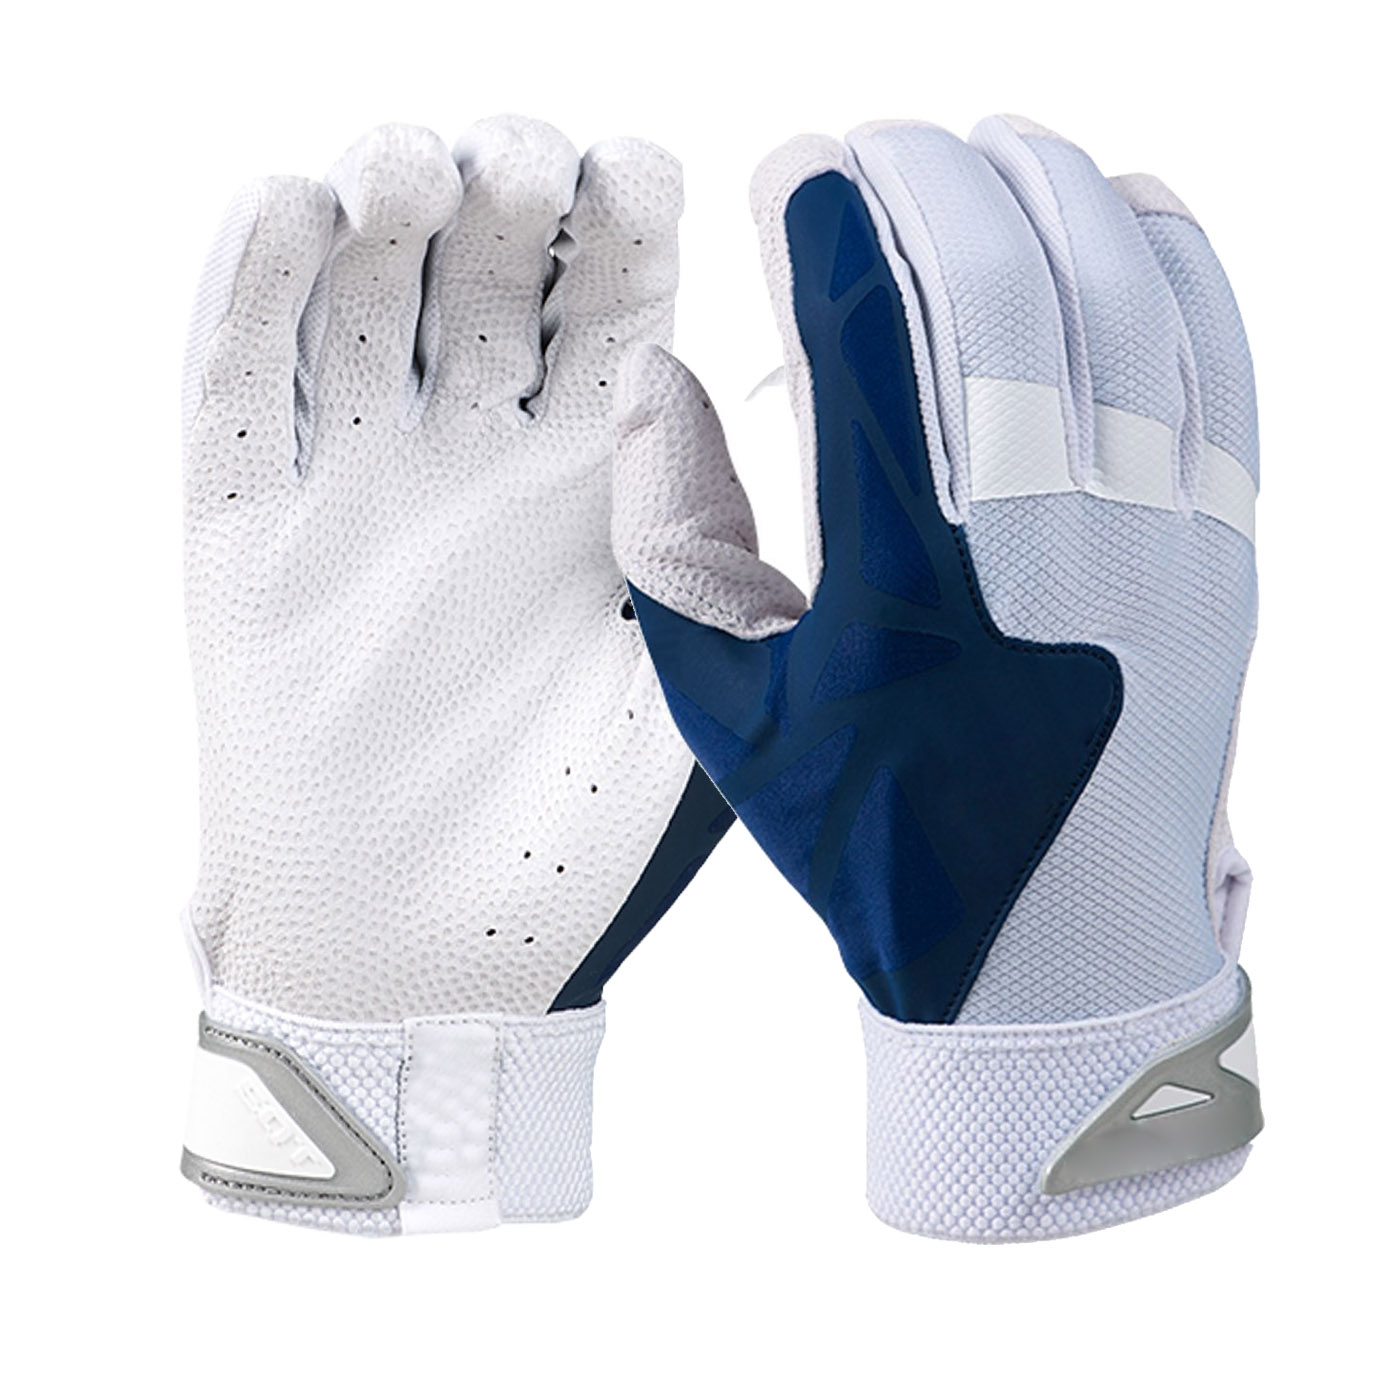 Custom Logo Batting Glove Design Your Own cheap Batting Gloves